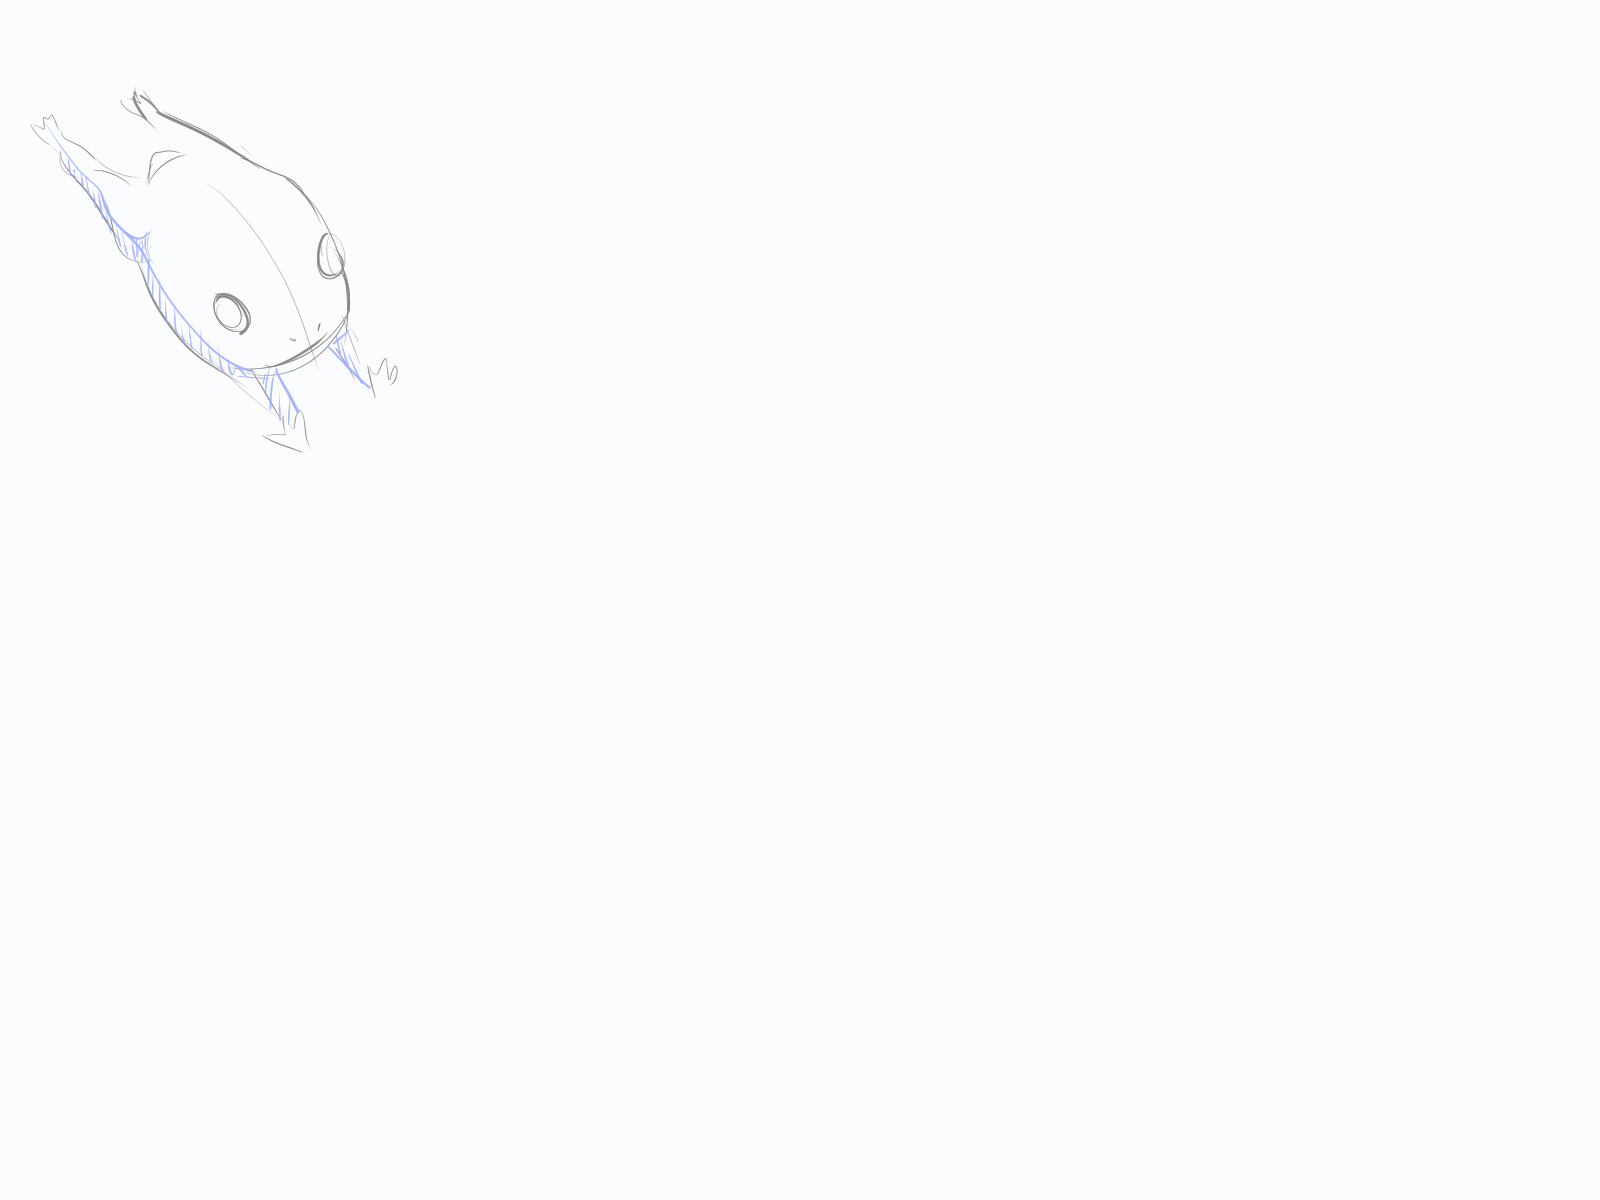 Frog Animation Sketch